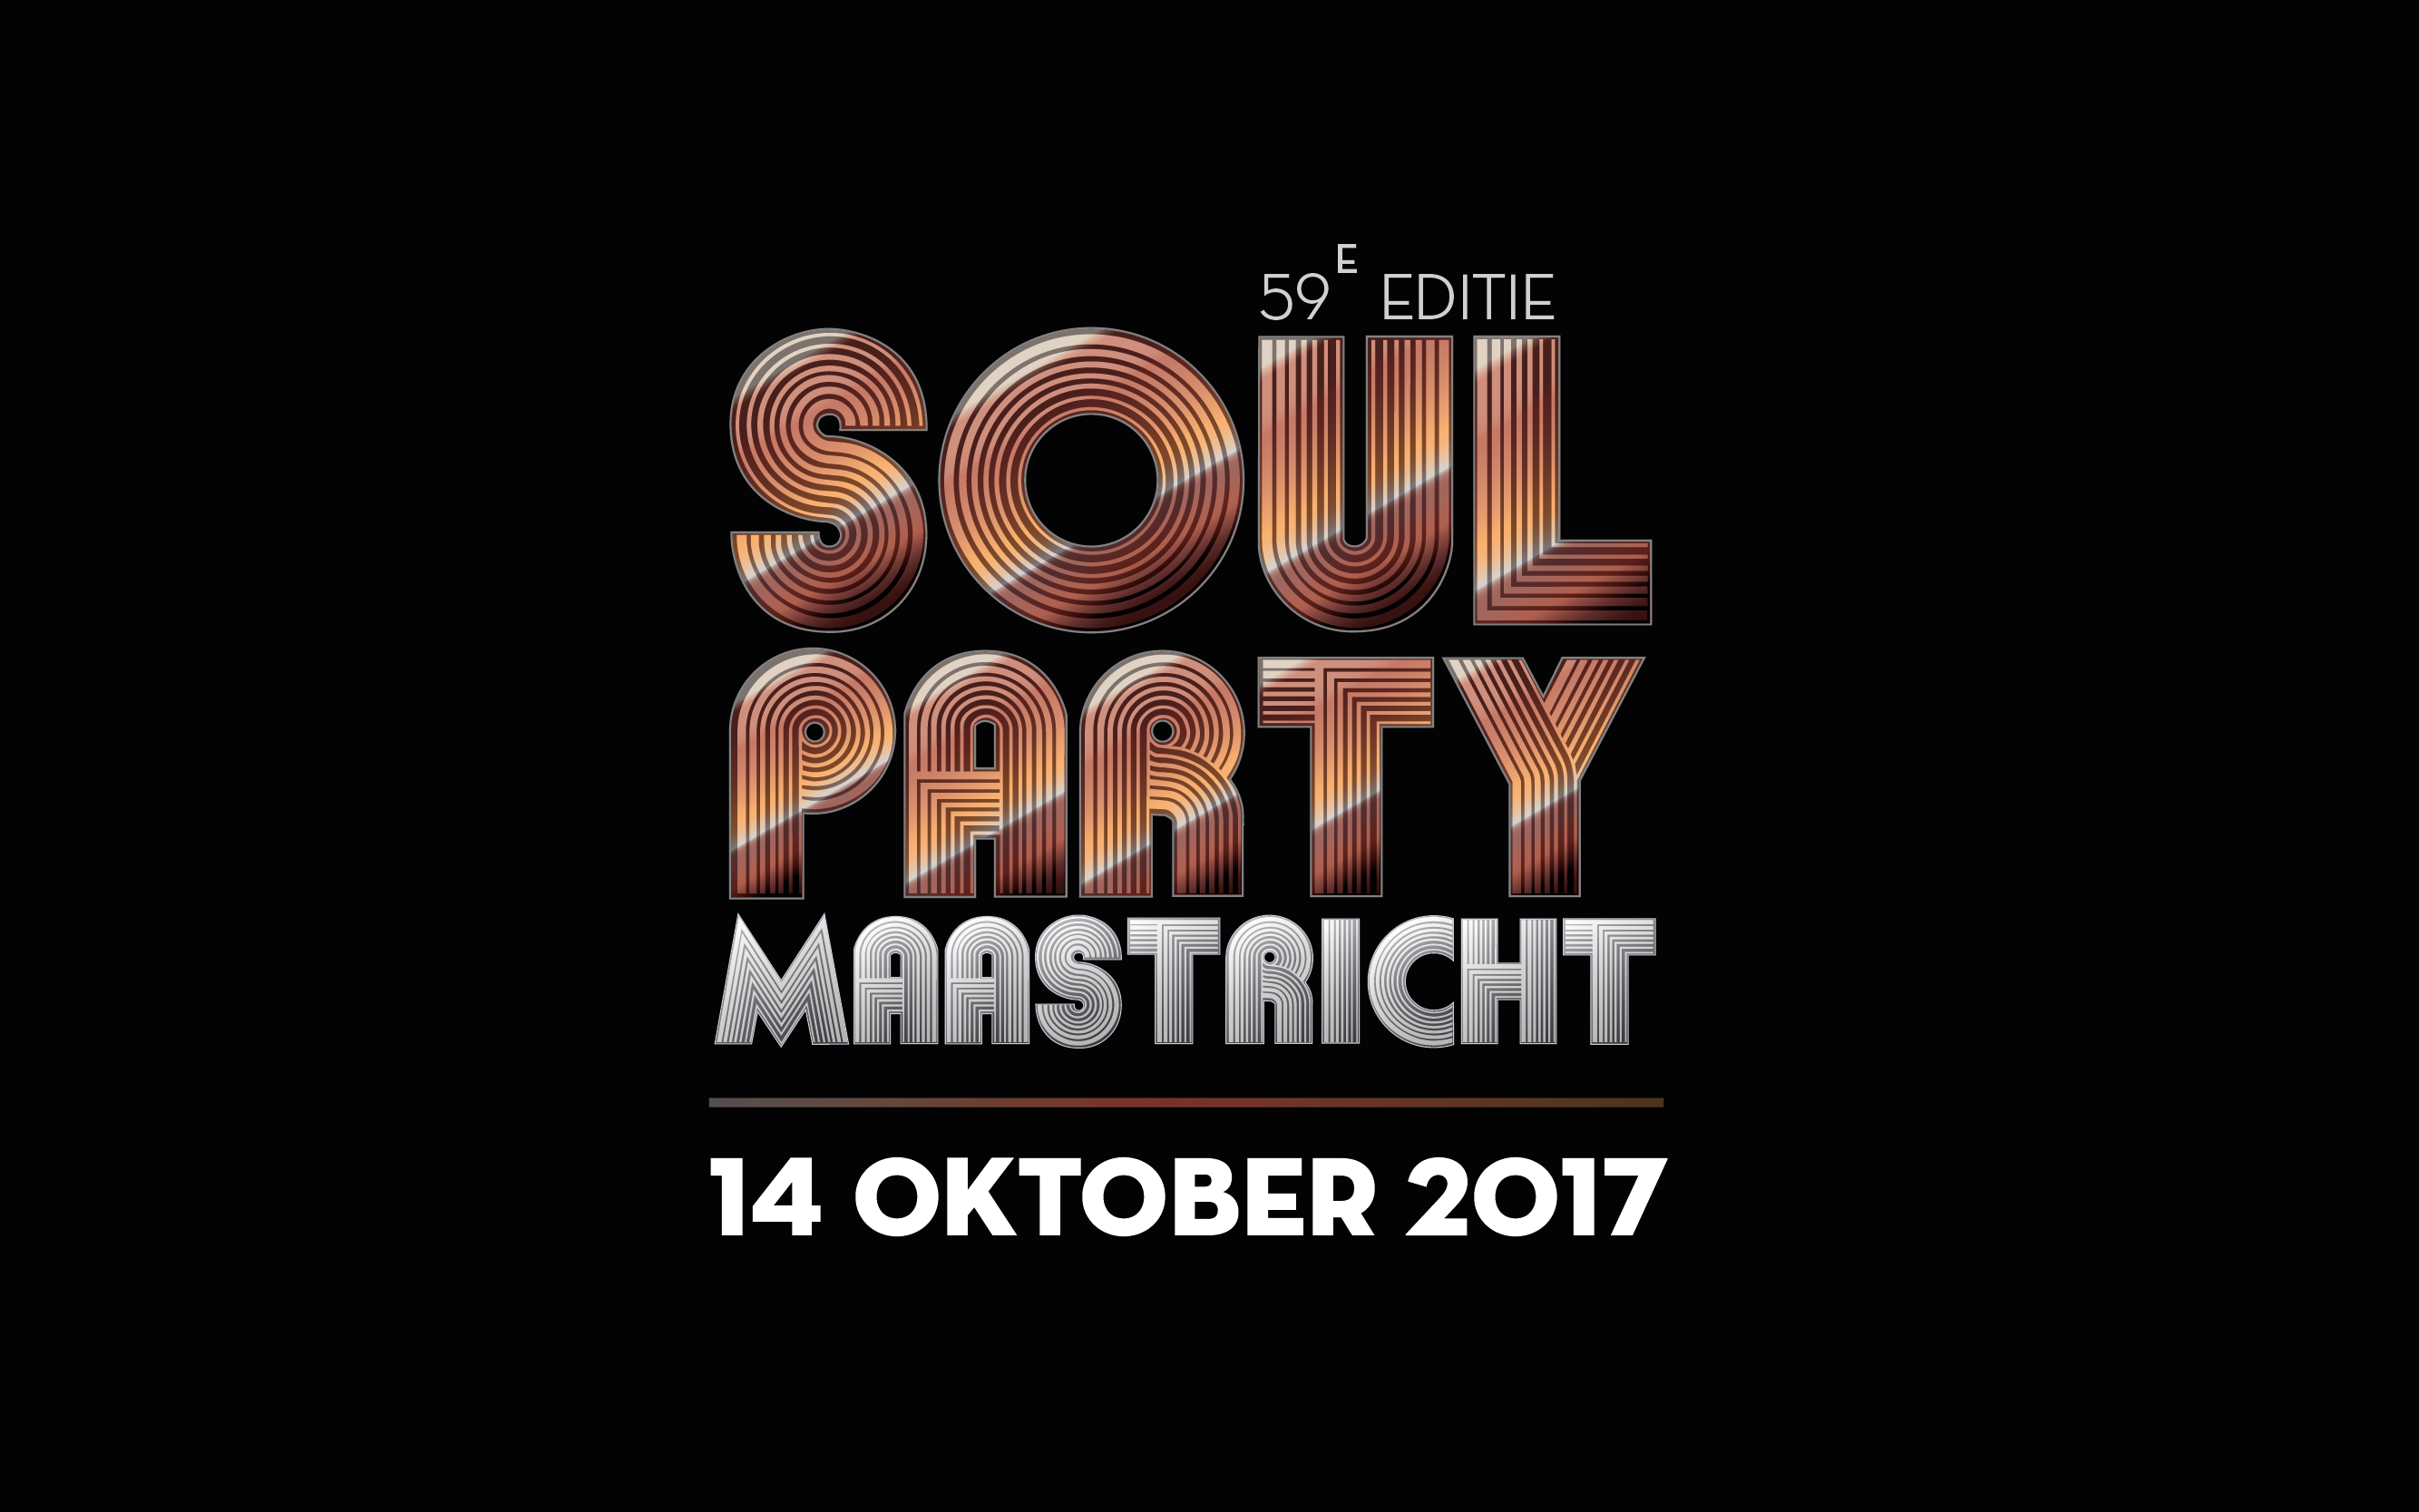 Soulparty 14 oktober 2017